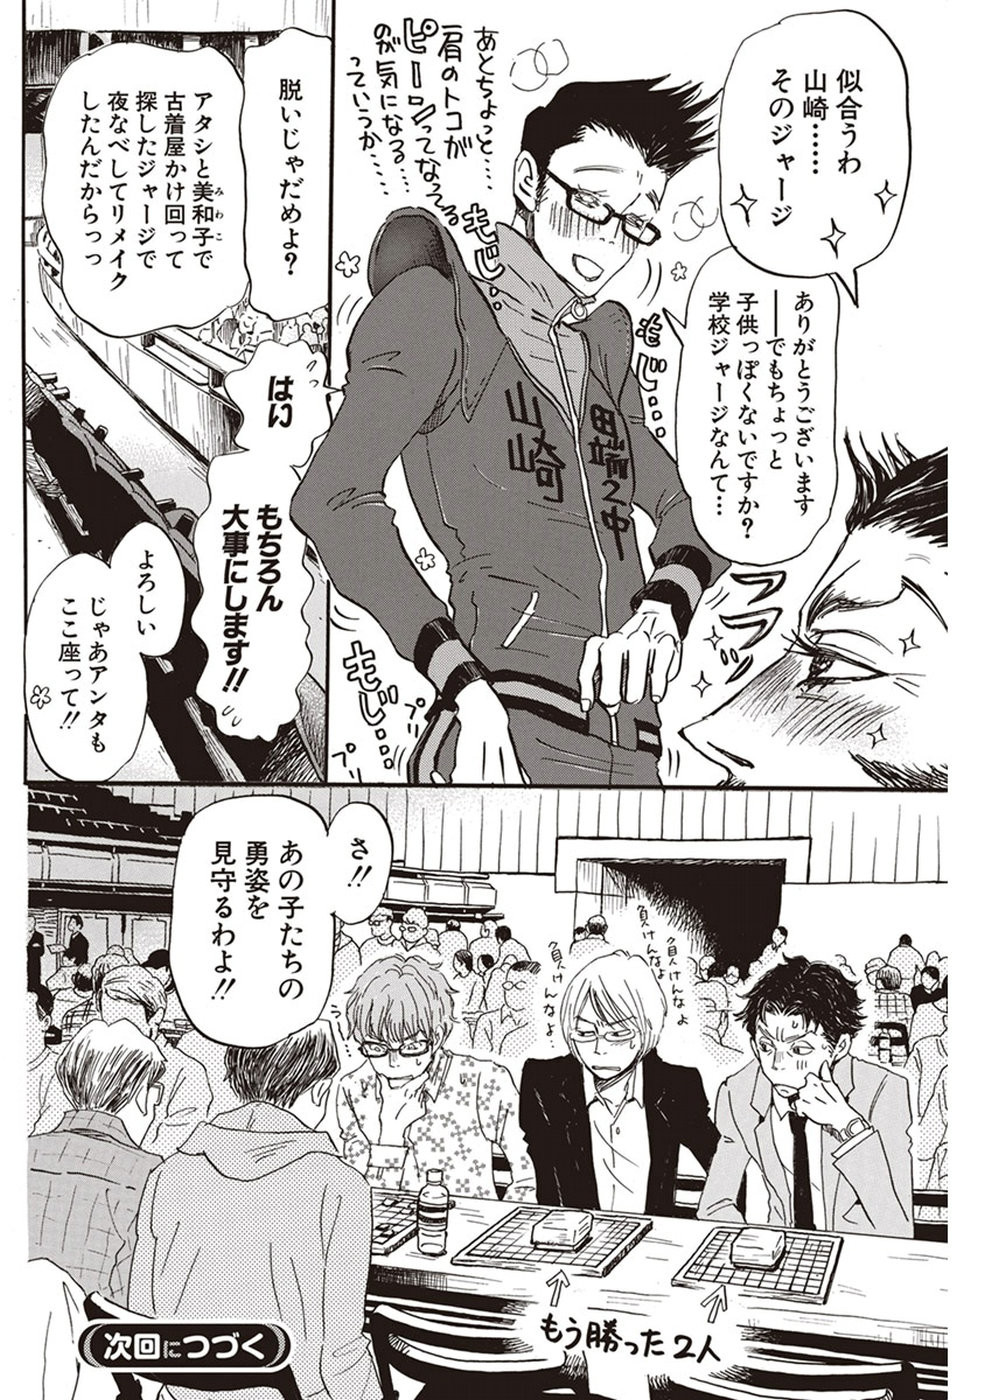 3 Gatsu no Lion - Chapter 149 - Page 12